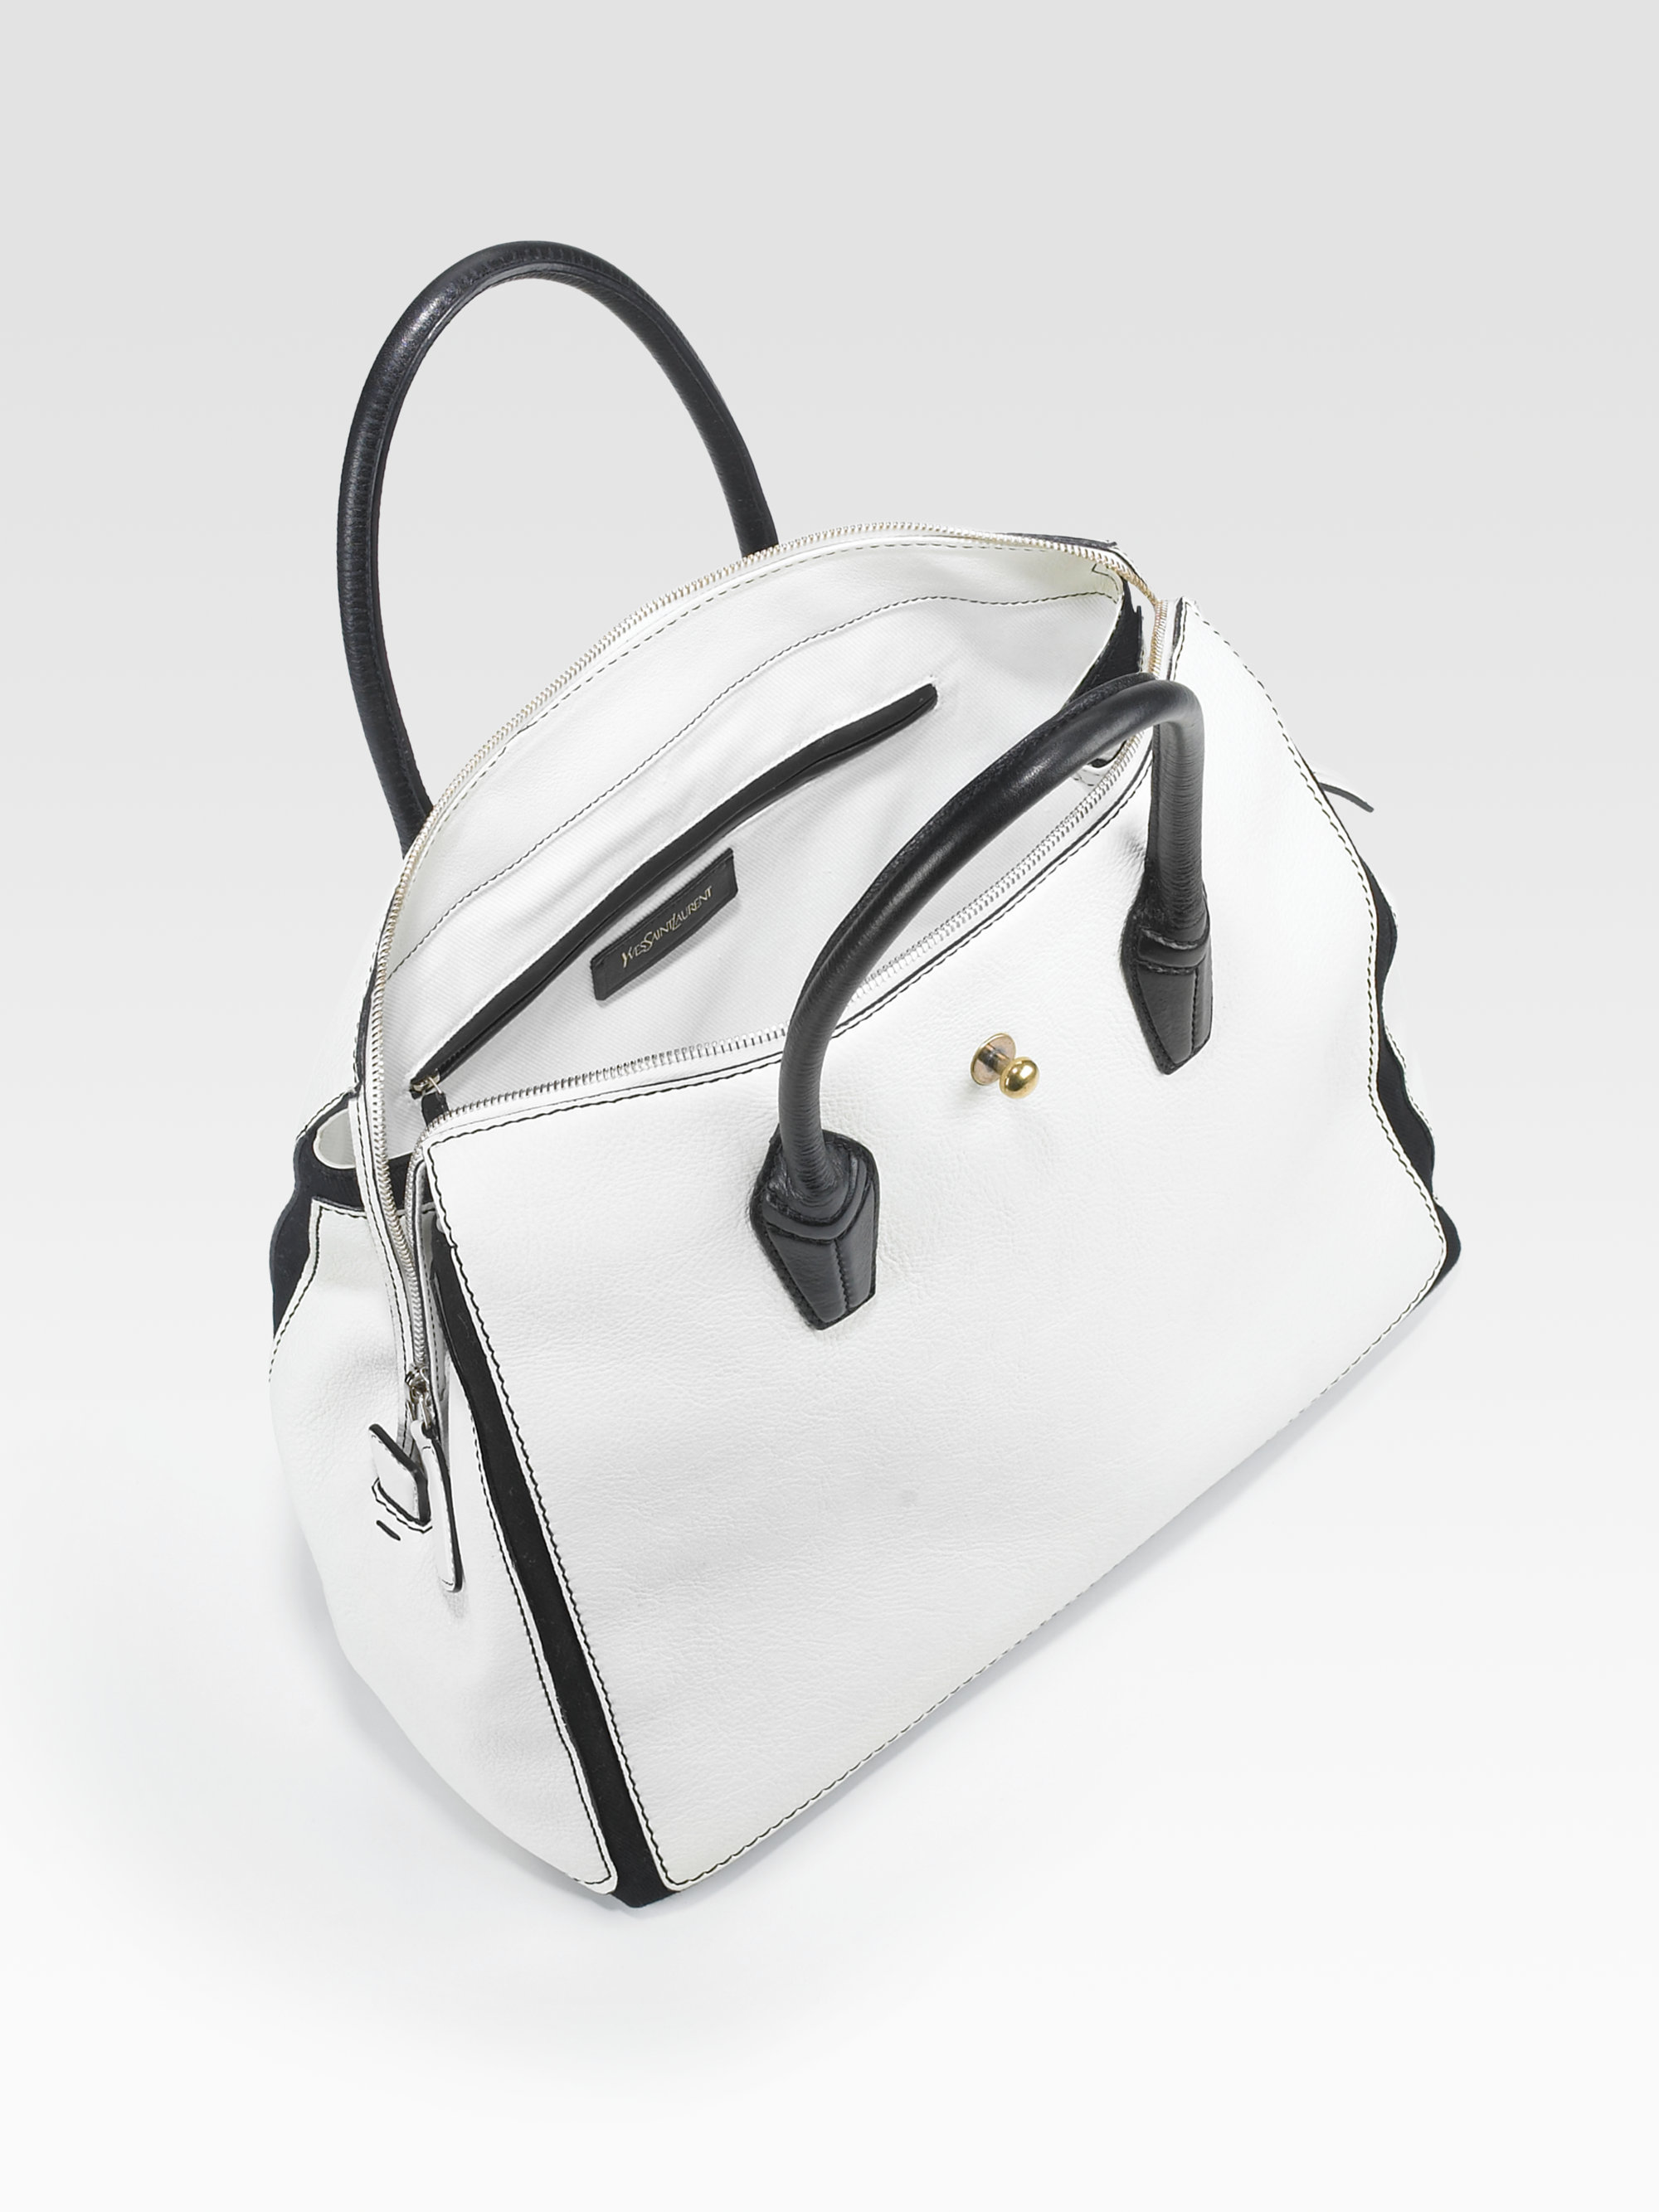 prada handbags for sale - Saint laurent Ysl Muse Two Cabas Satchel in White (white-black) | Lyst